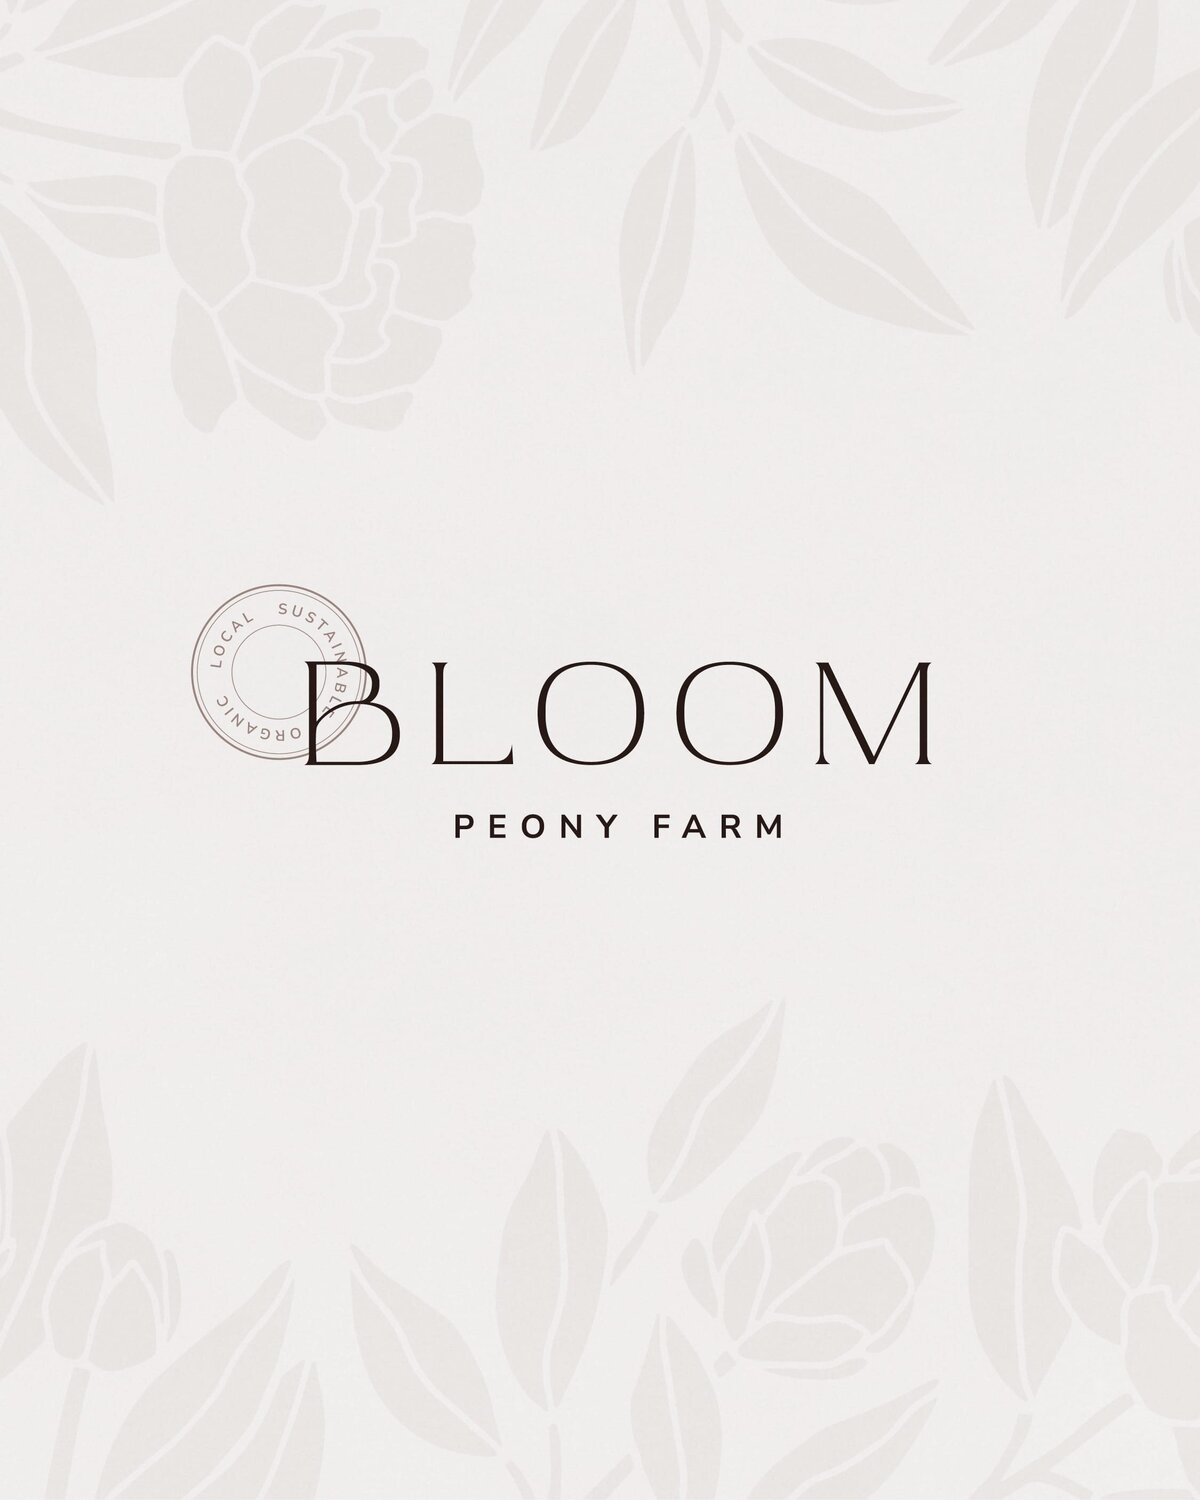 BloomPeonyFarm_LaunchGraphics_Instagram14